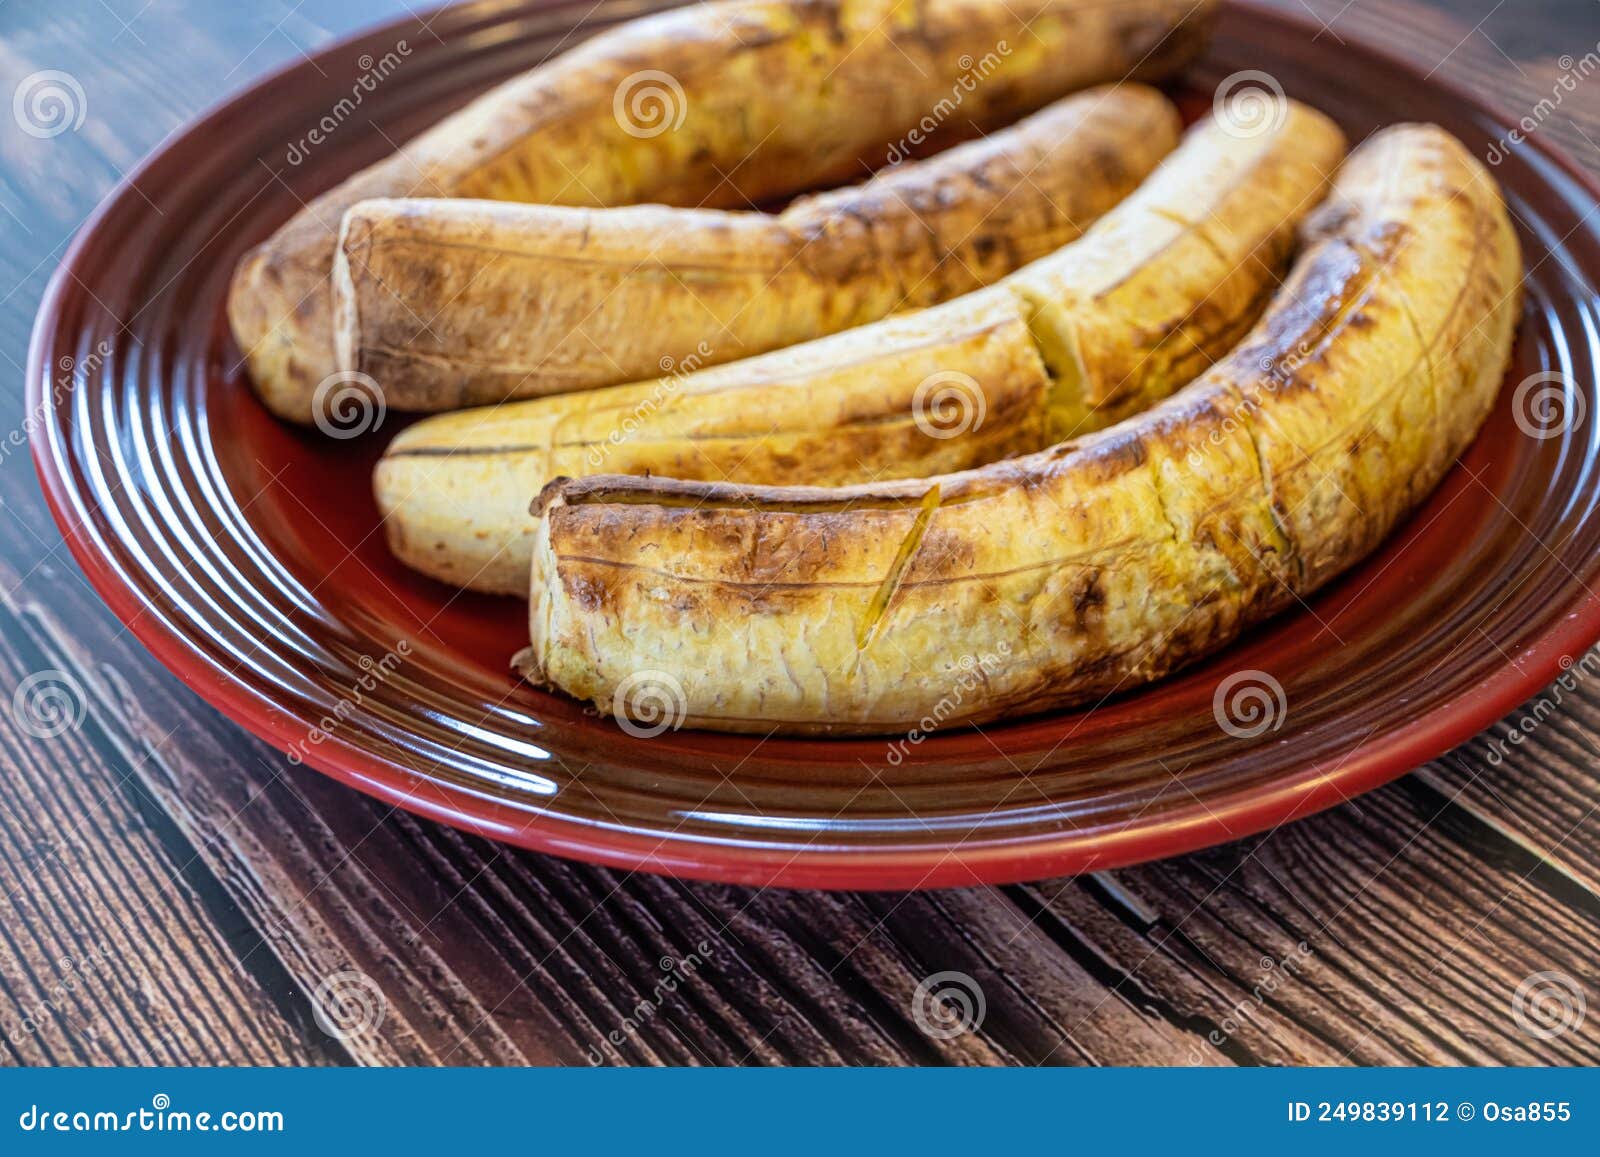 nigerian roasted plantains - boli - ready to eat